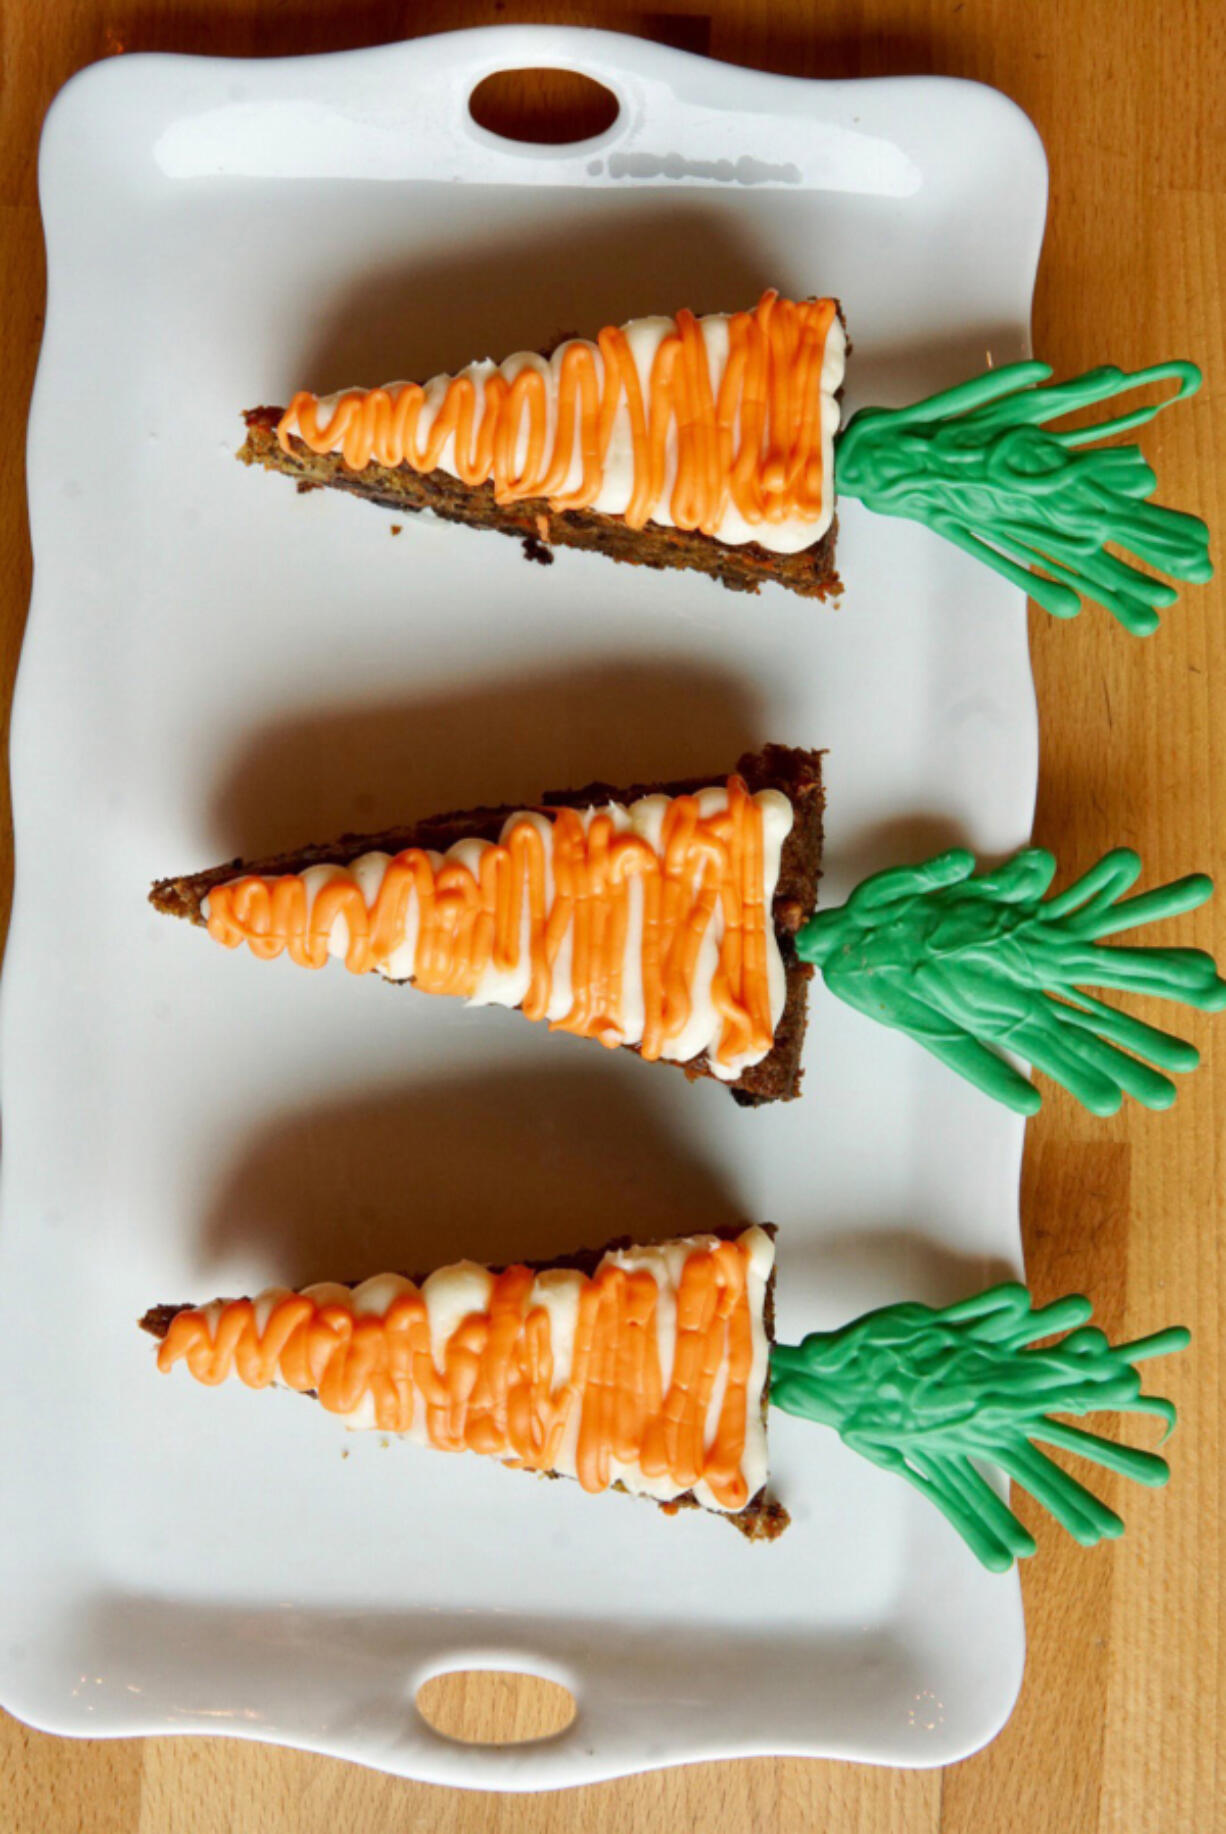 Carrot cakes by Bleu Door Bakery.